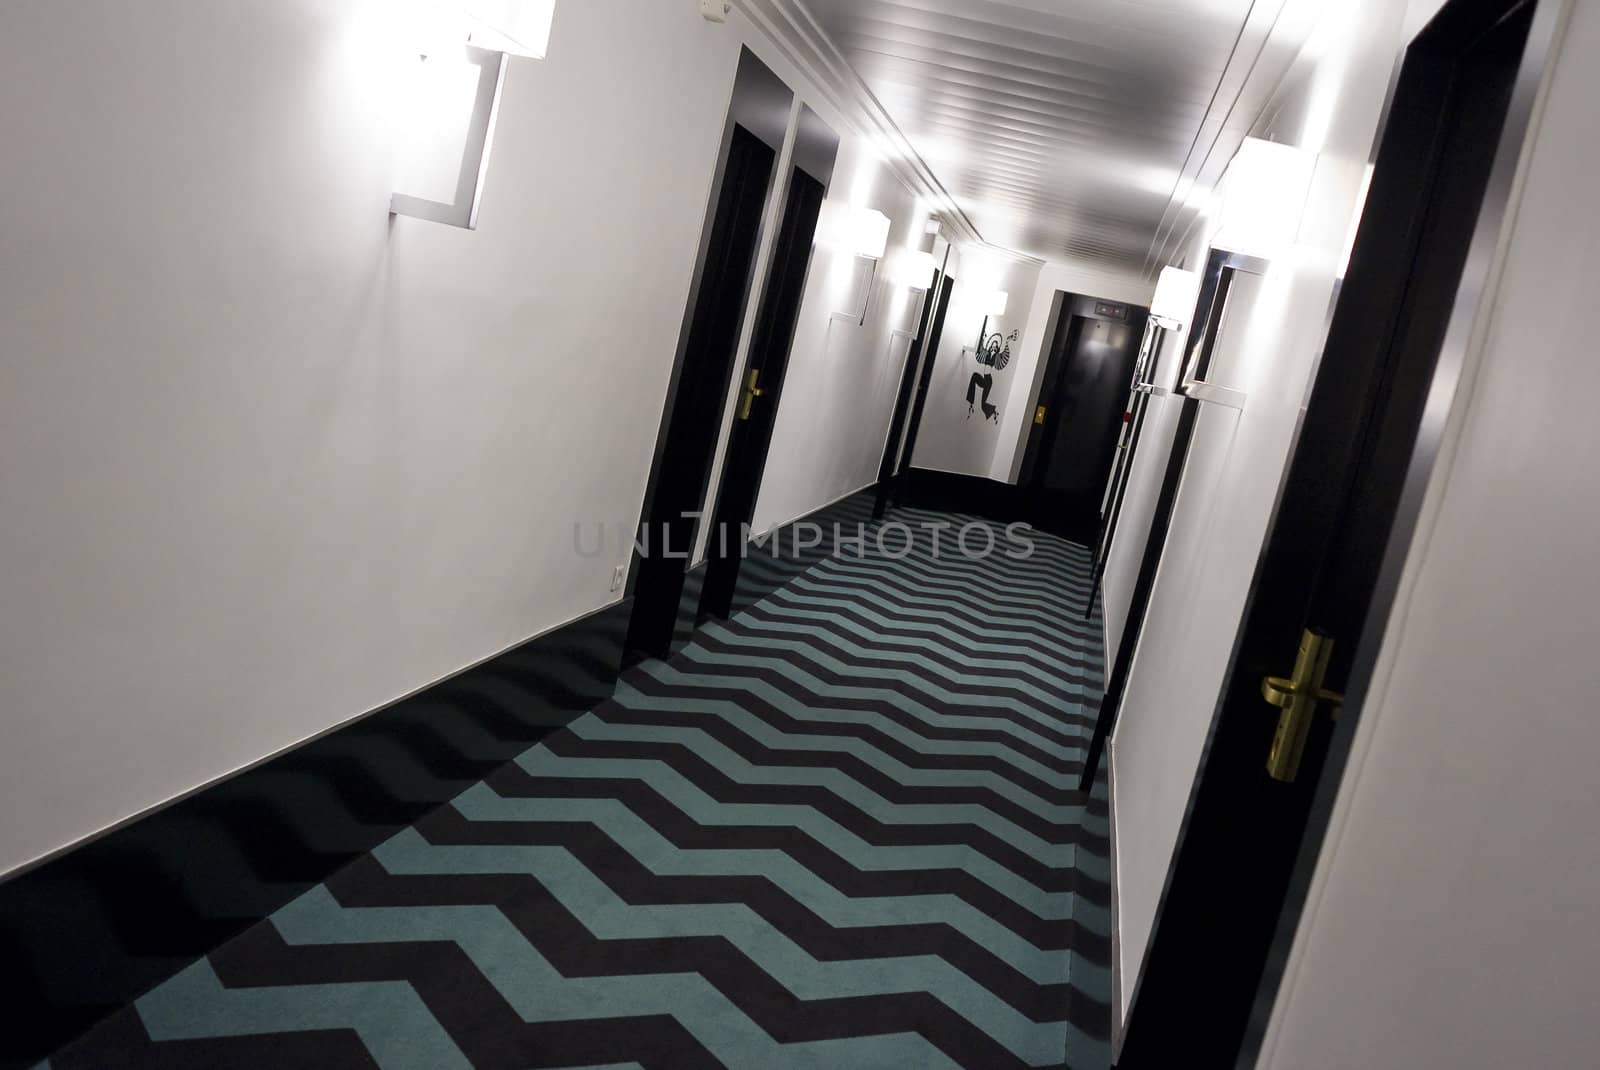 Interior of newly renovated hotel corridor - Paris, France.